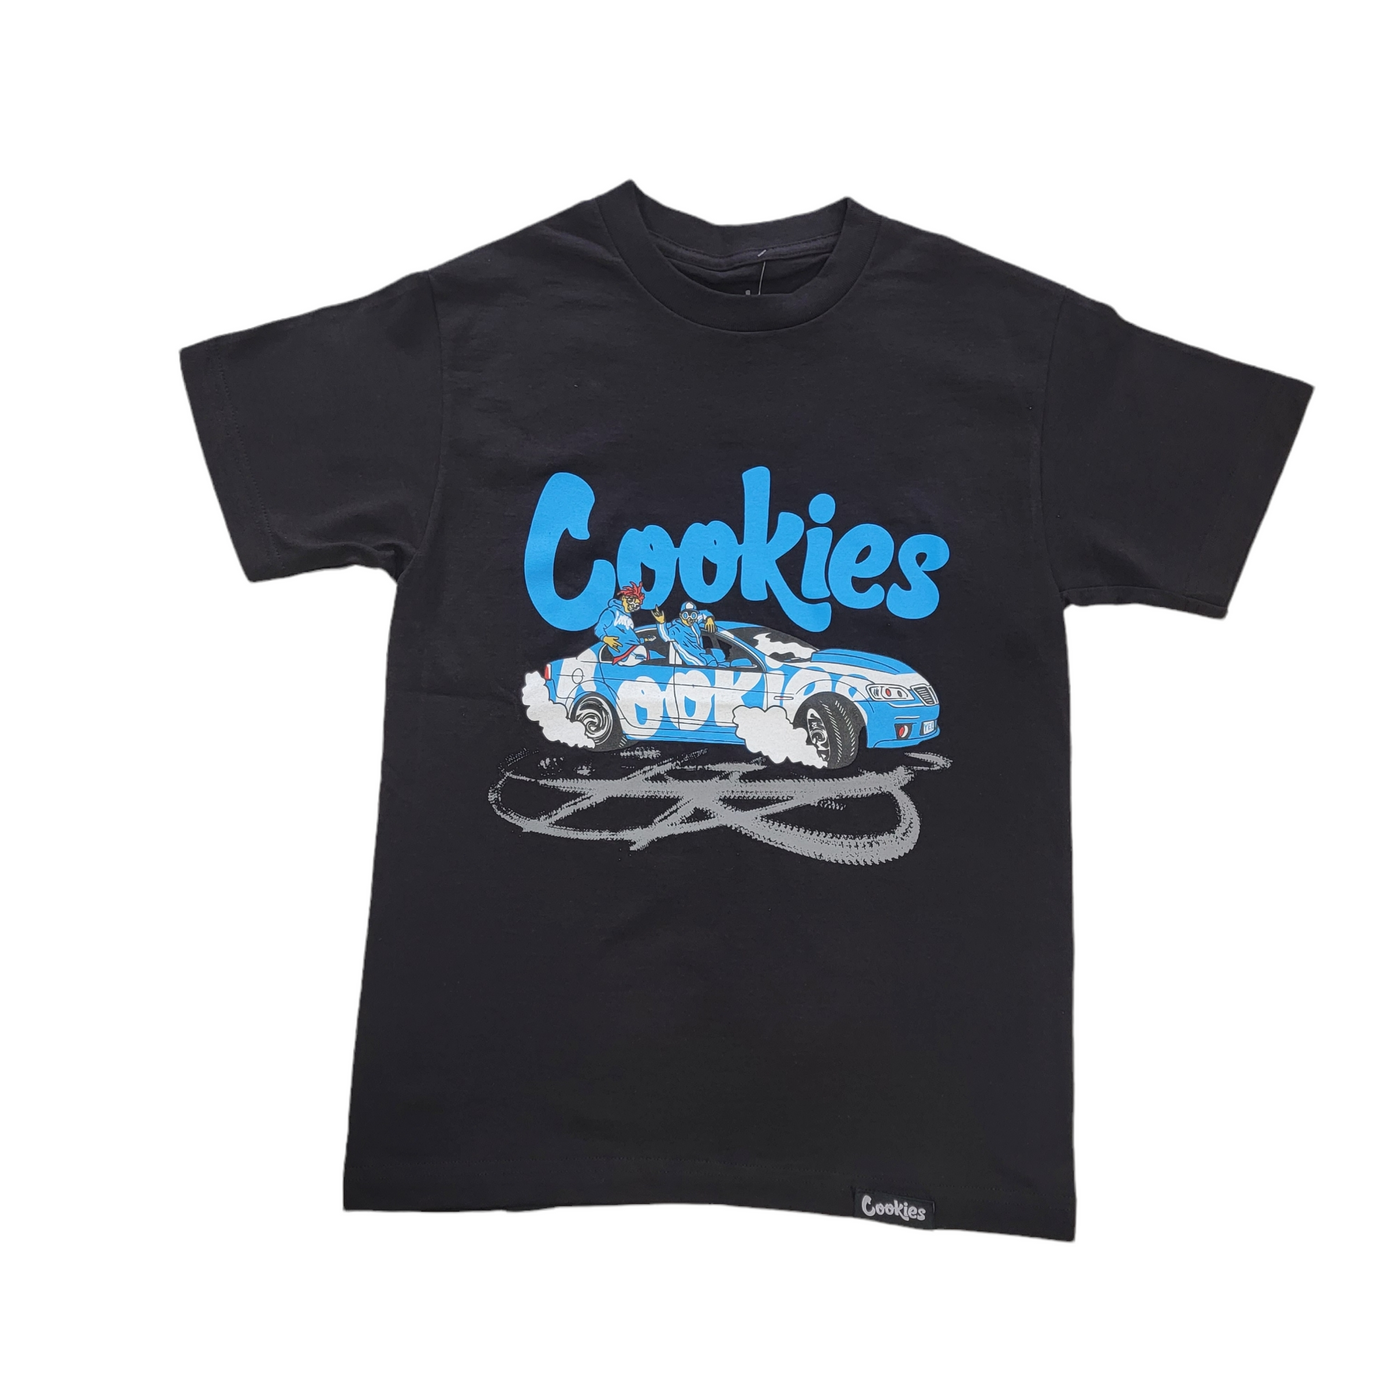 Cookies Sideshow T-Shirt Black